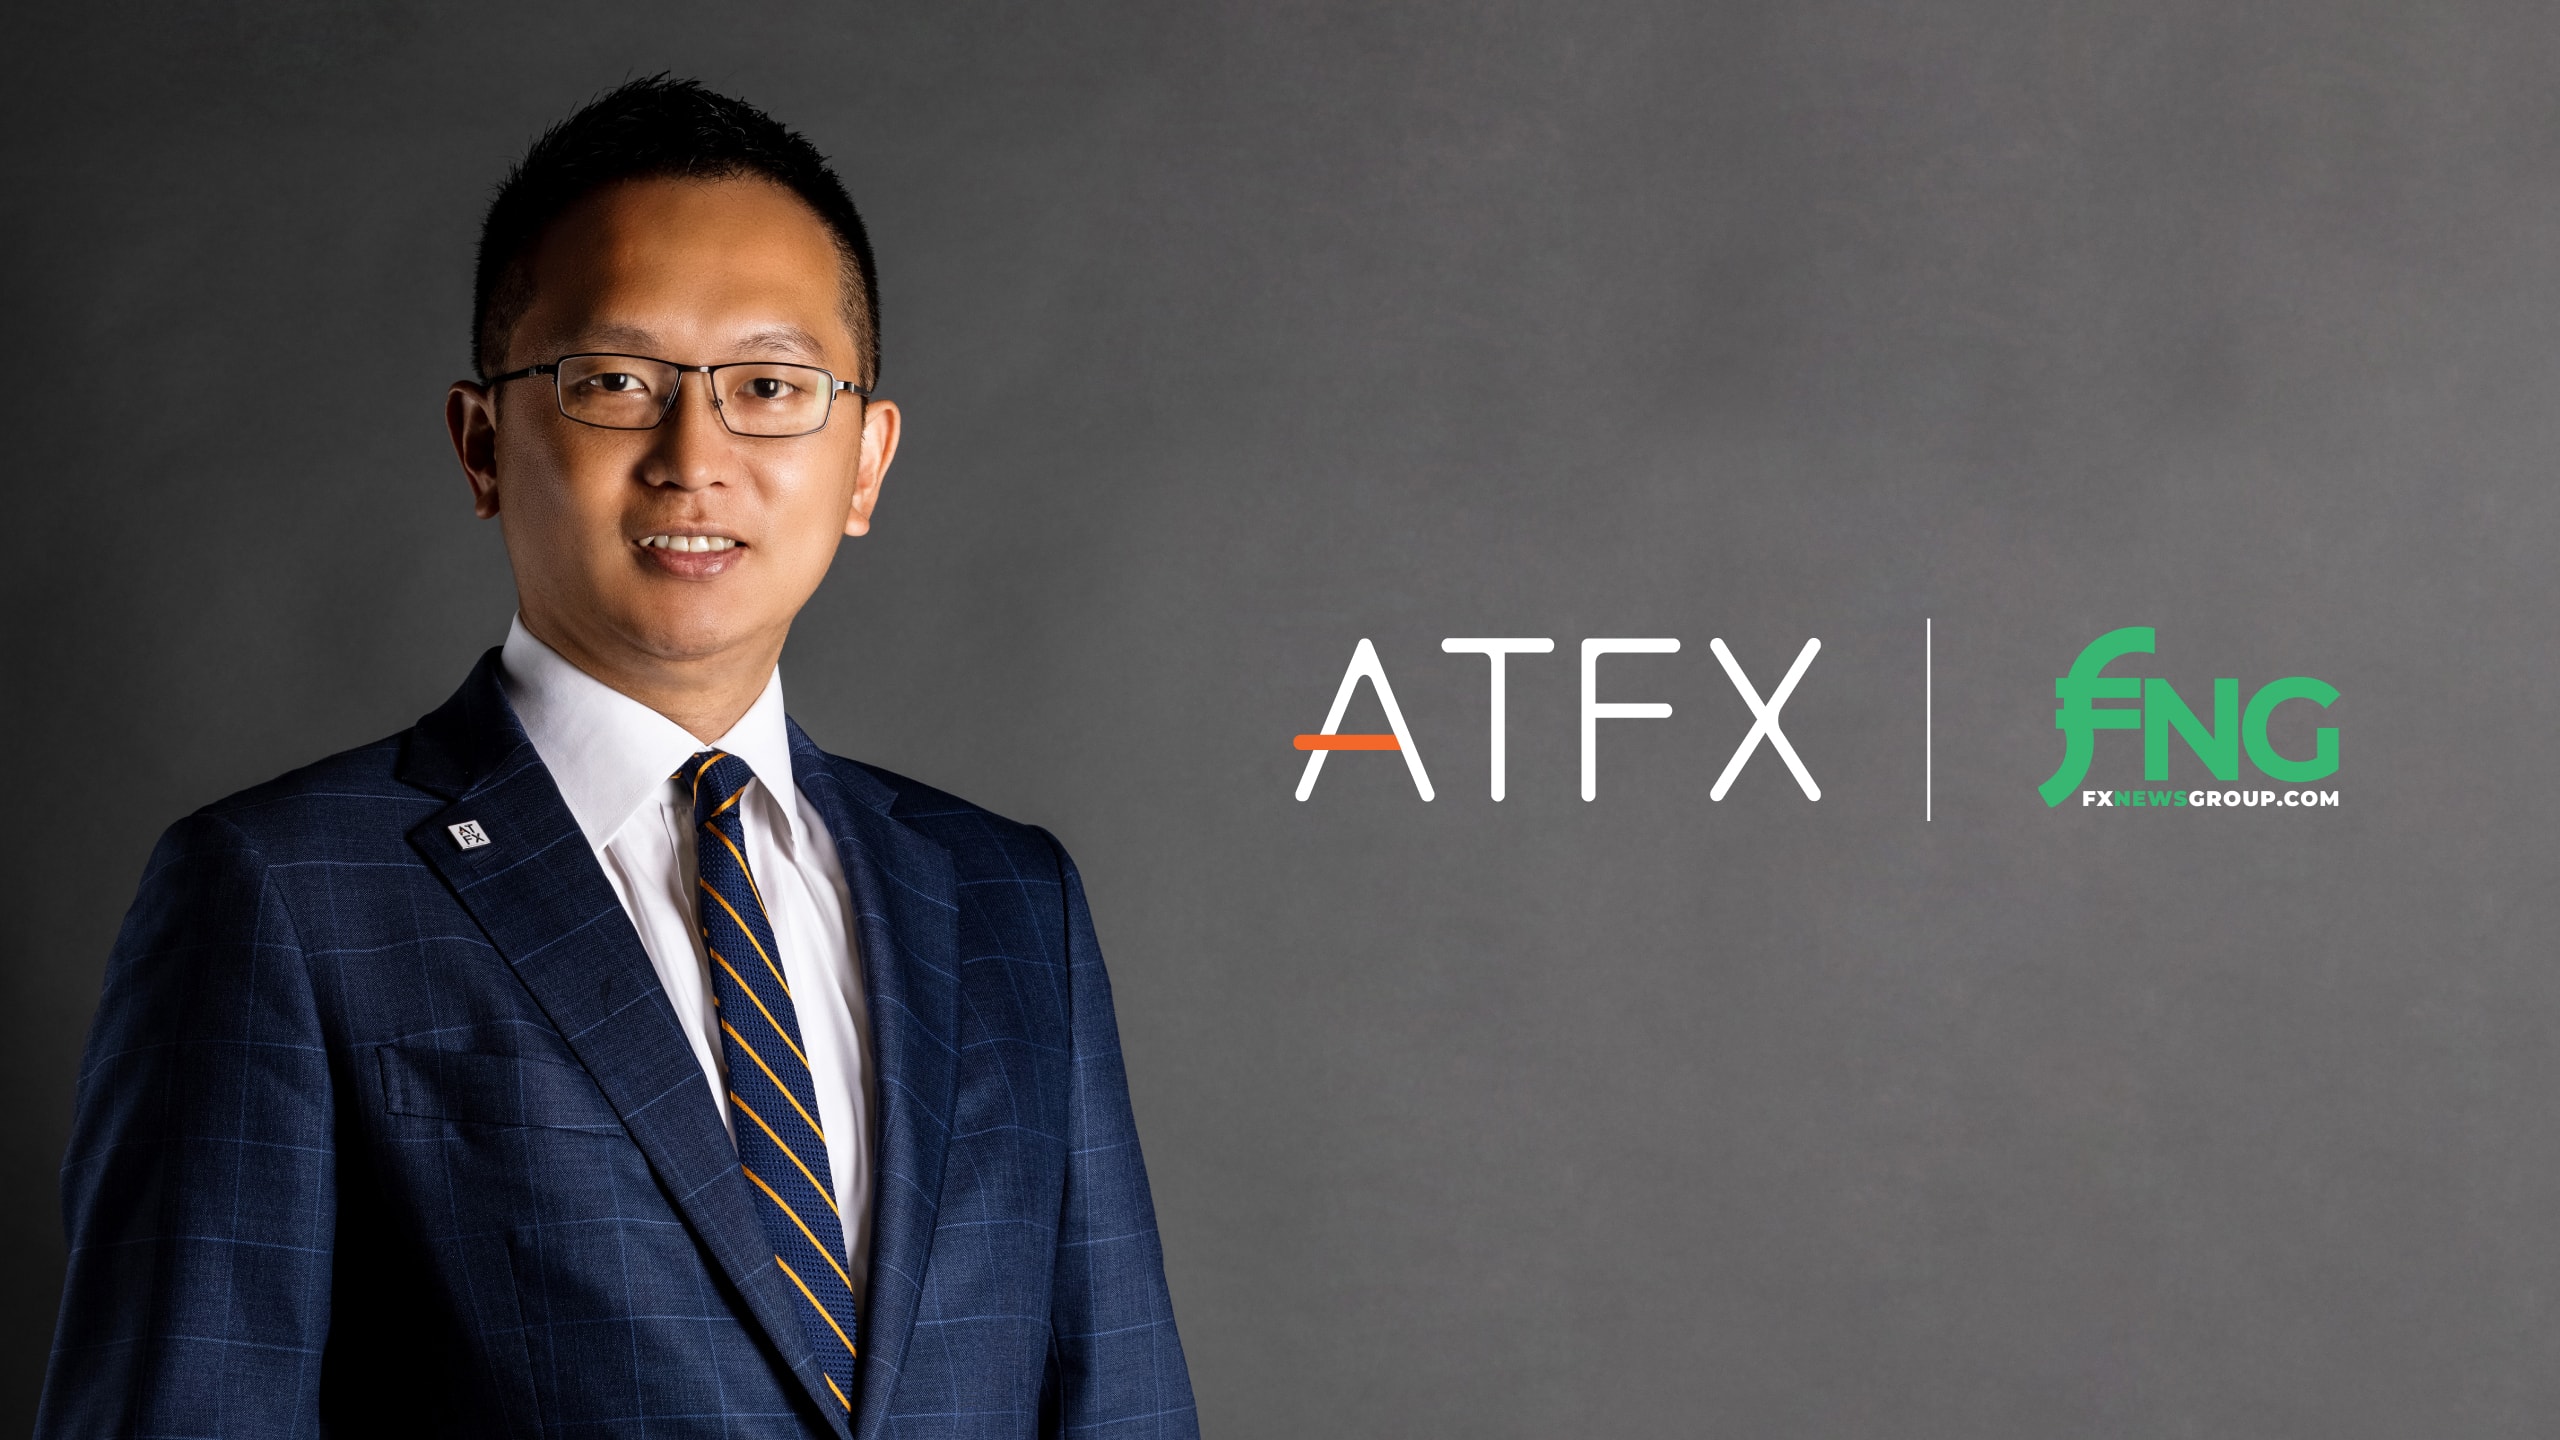 fng interview ATFX Joe Li